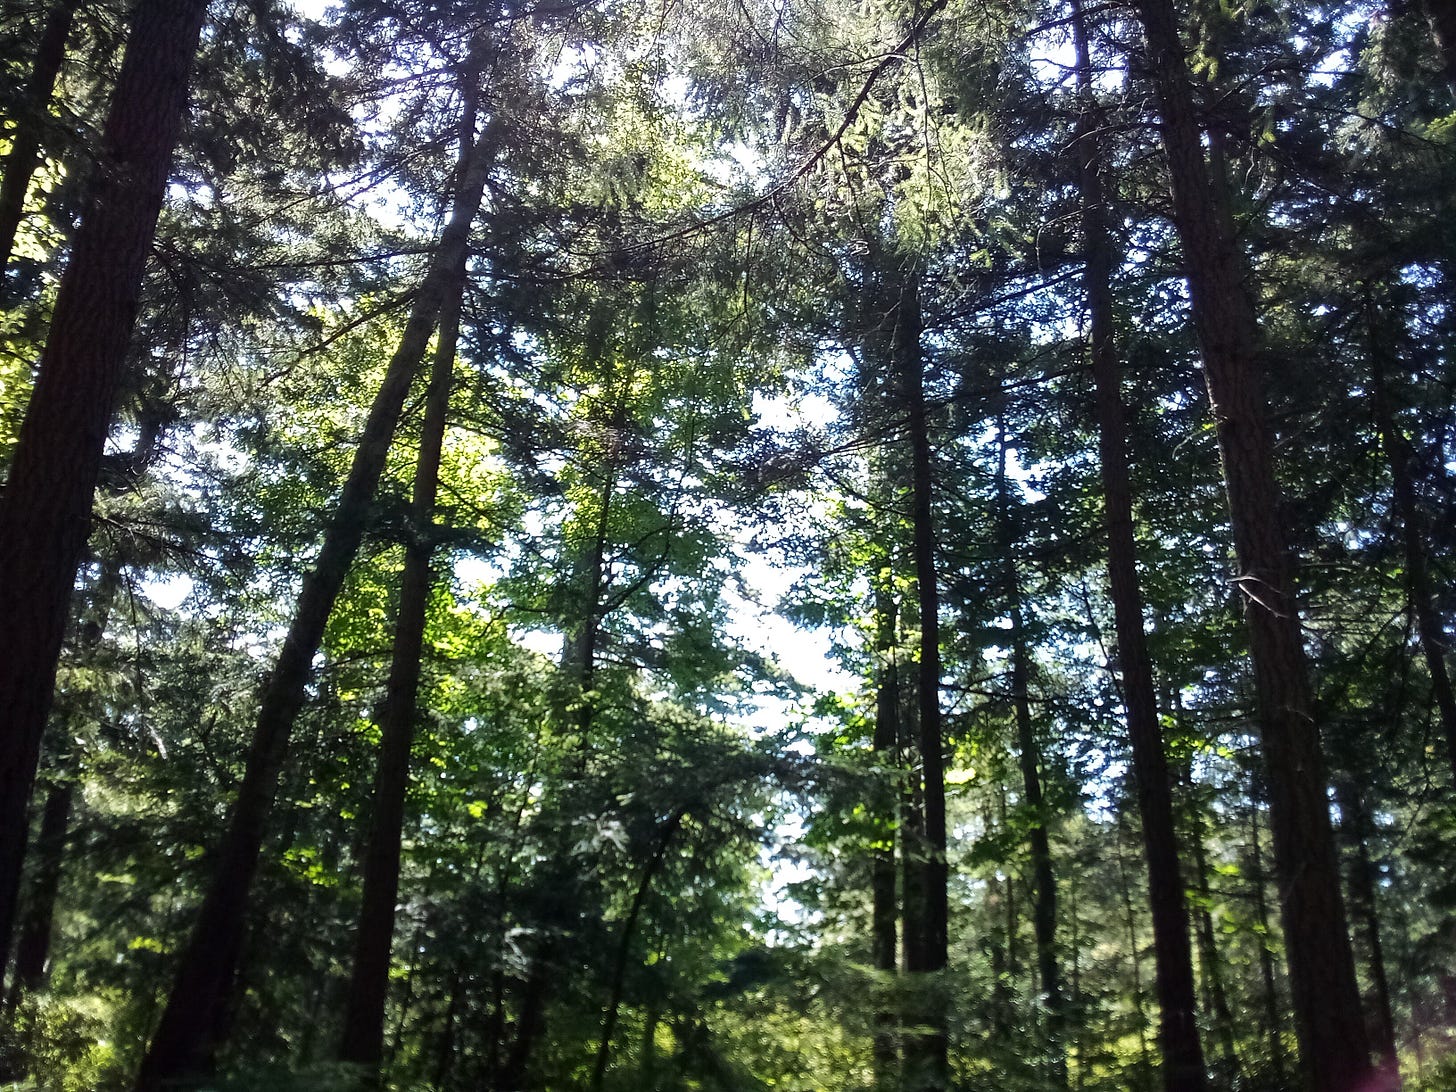 Sunshine filtered through tall pine trees